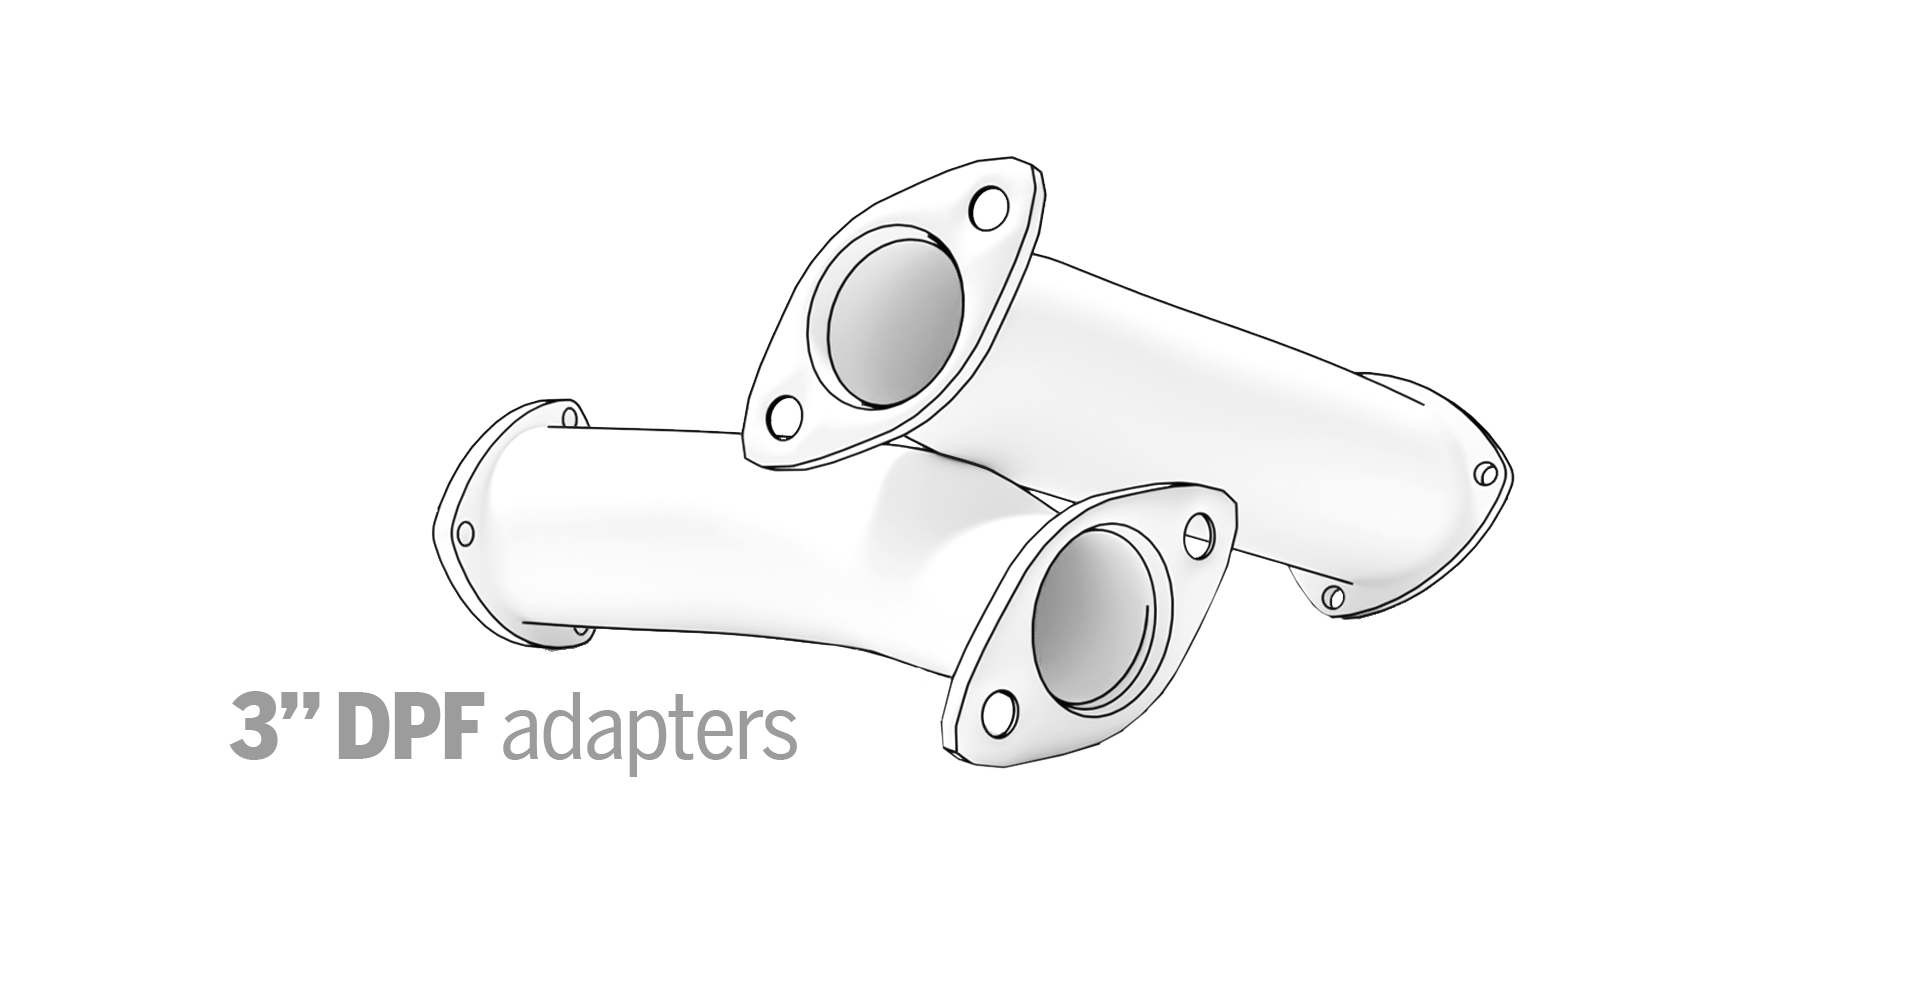 DPF adapters